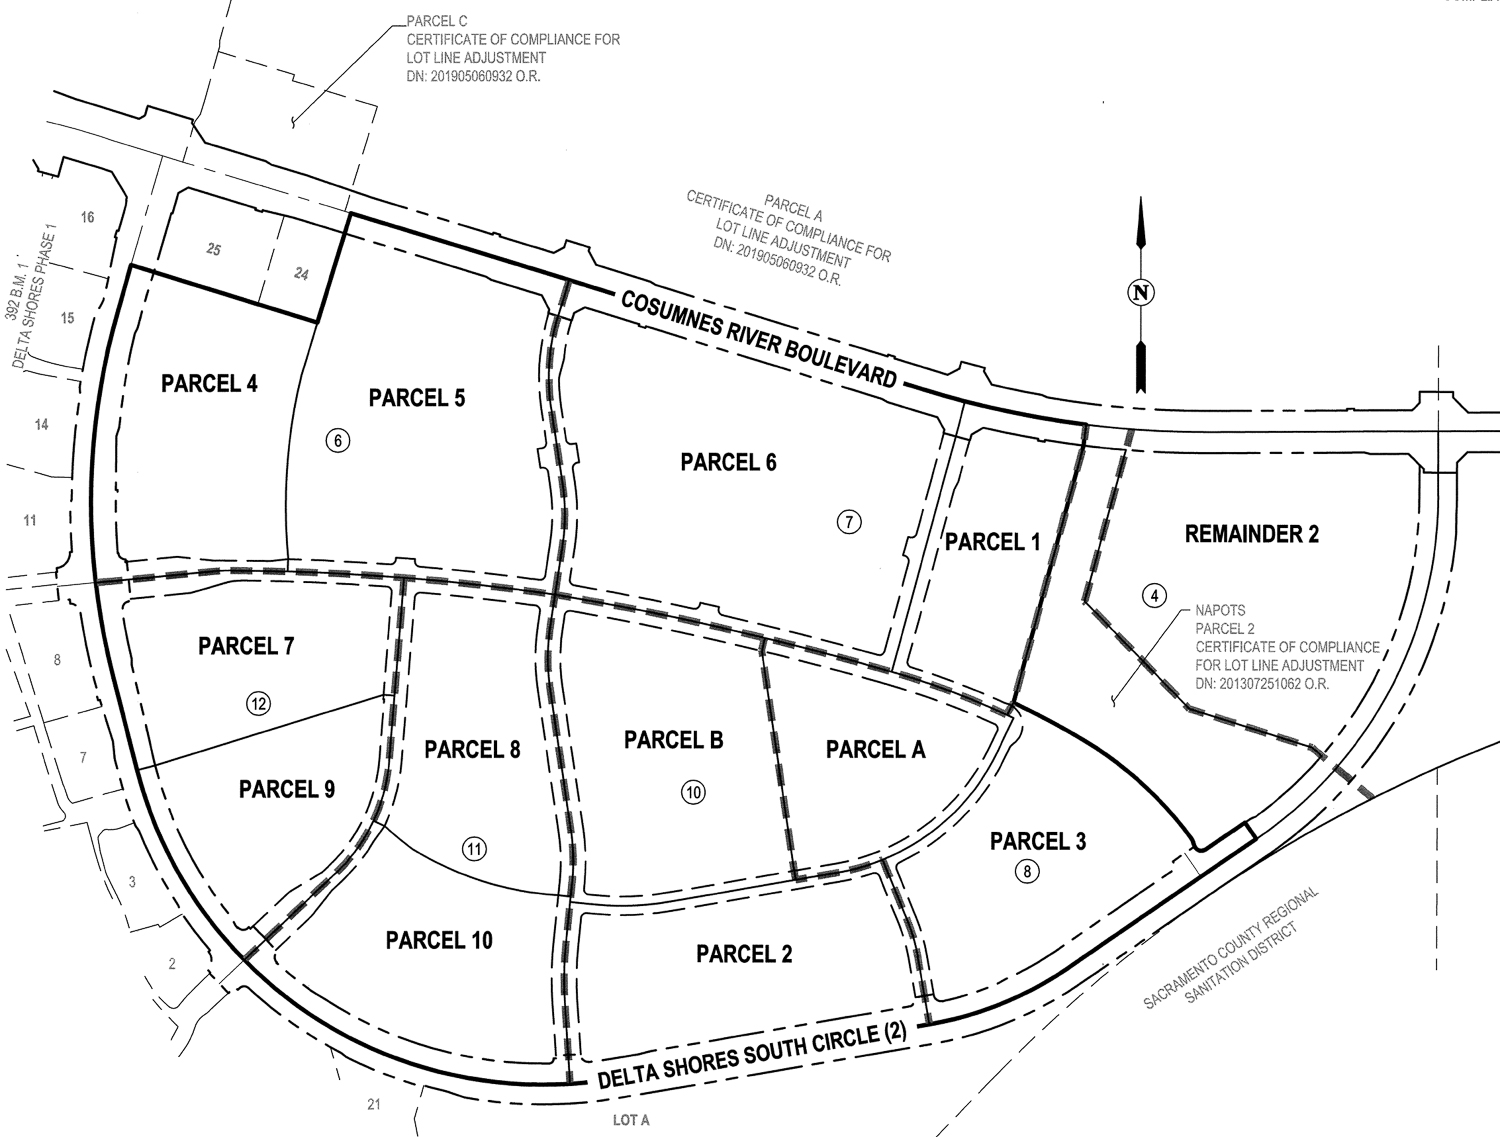 Delta Shores Circle masterplan, illustration by Dahlin Group